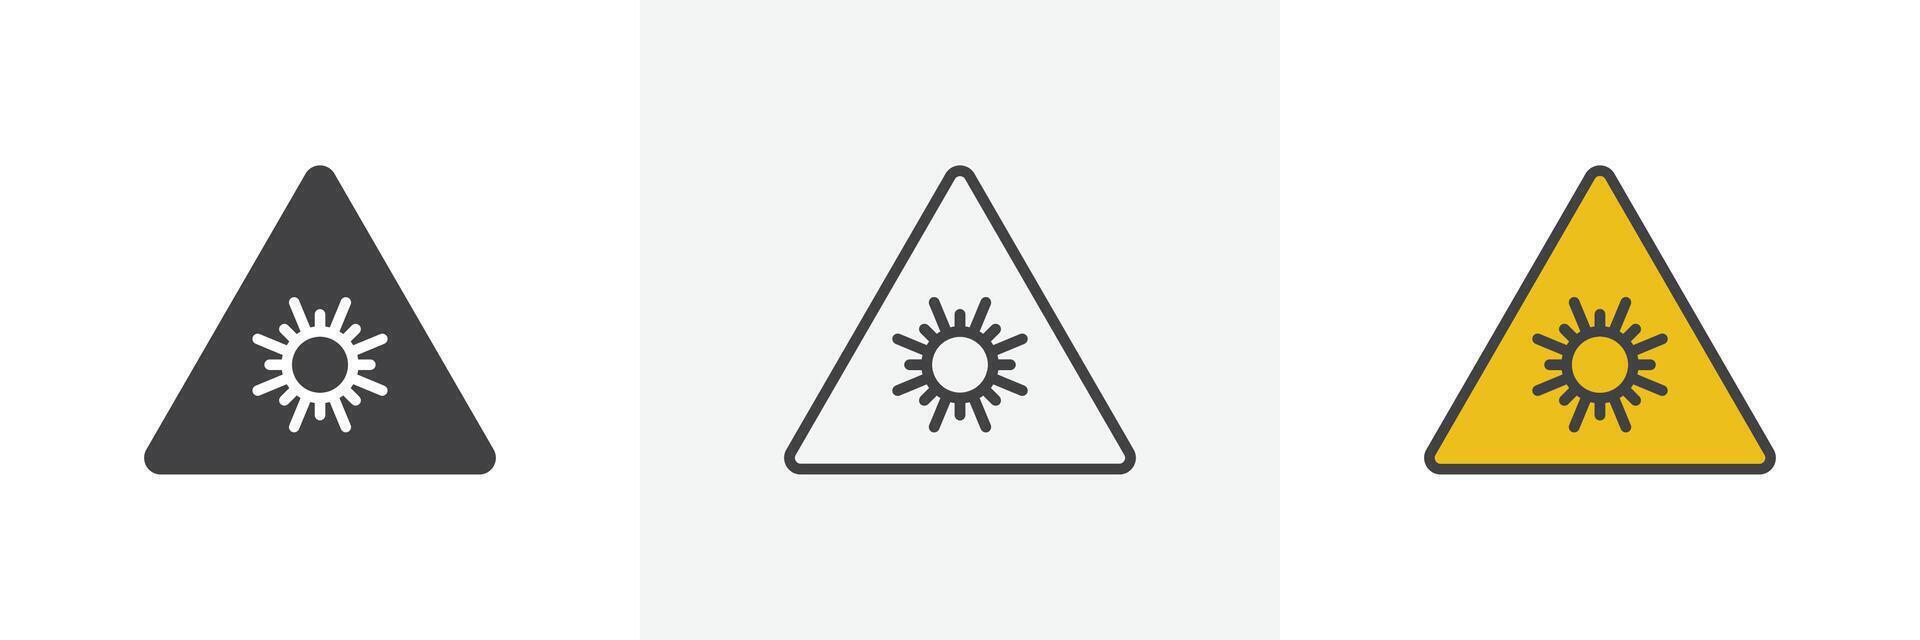 Laser warning icon vector